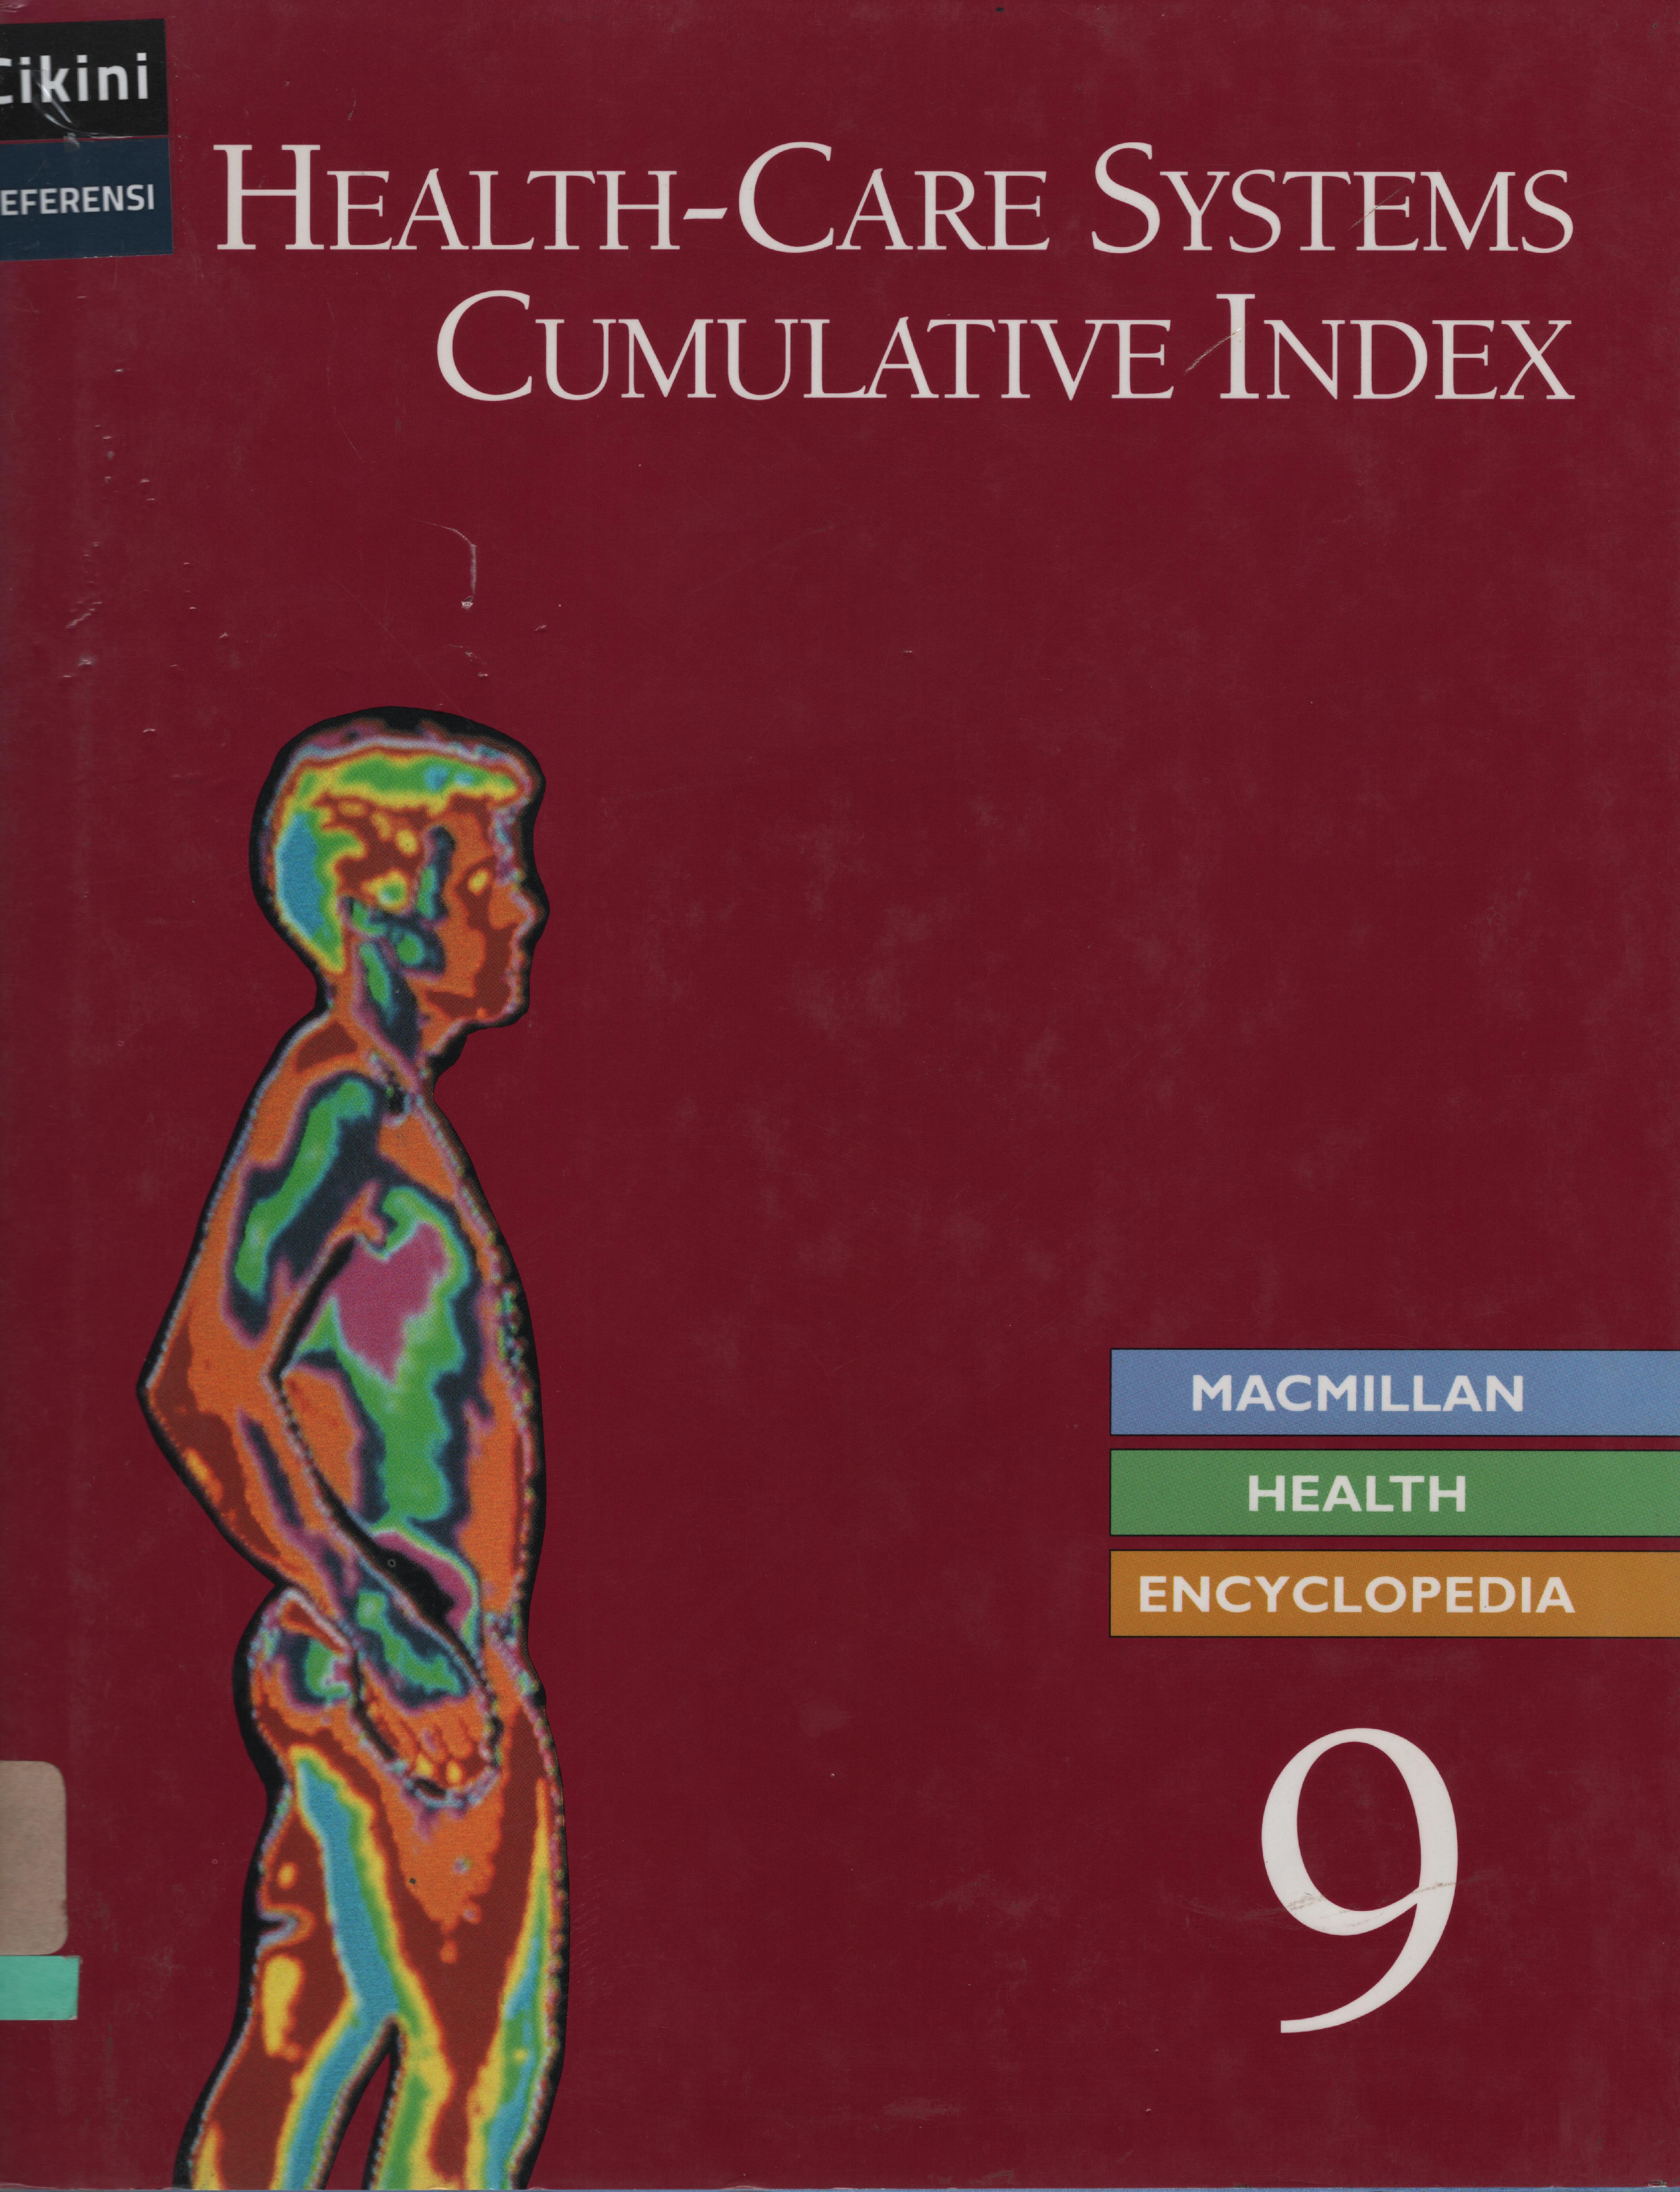 Macmillan health encyclopedia 9 :  health-care systems cumulative index